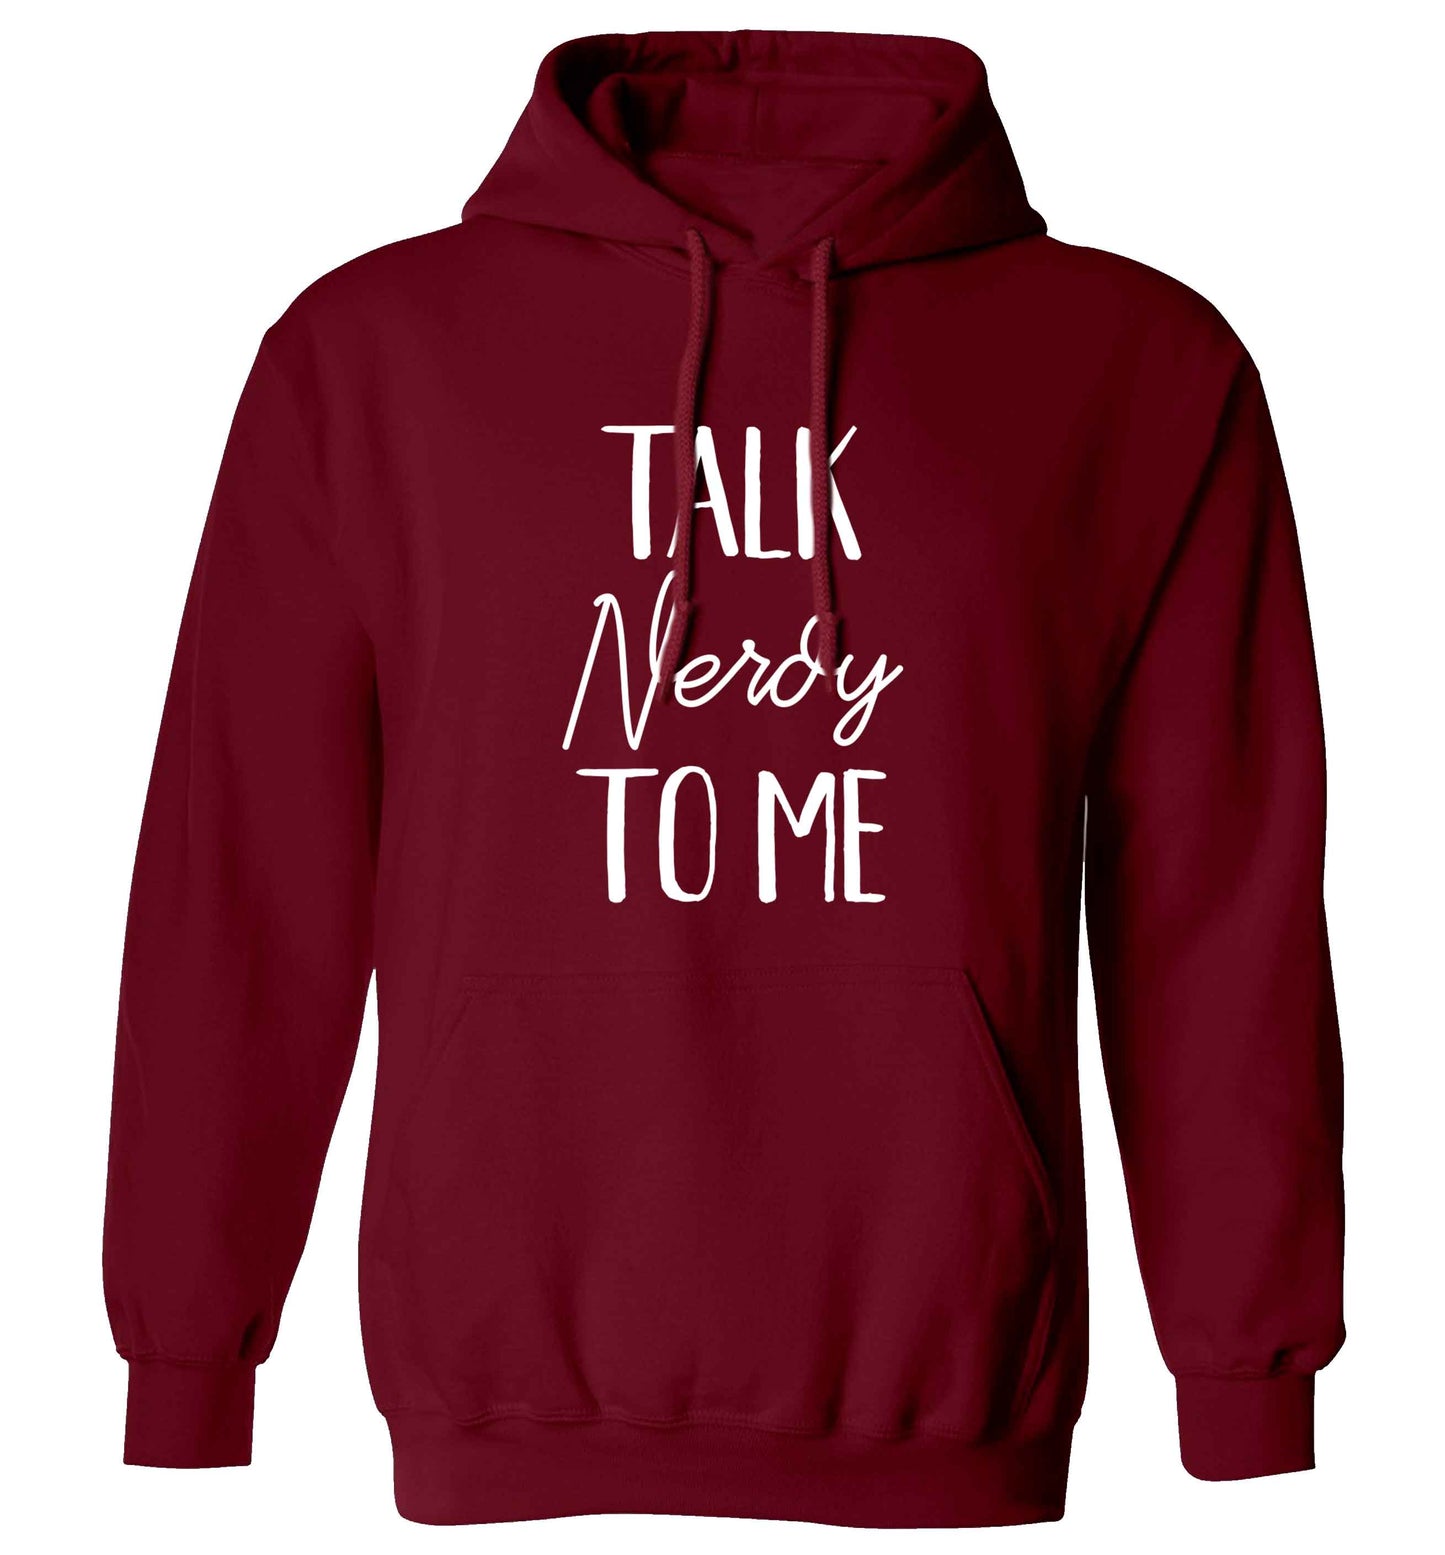 Talk nerdy to me adults unisex maroon hoodie 2XL